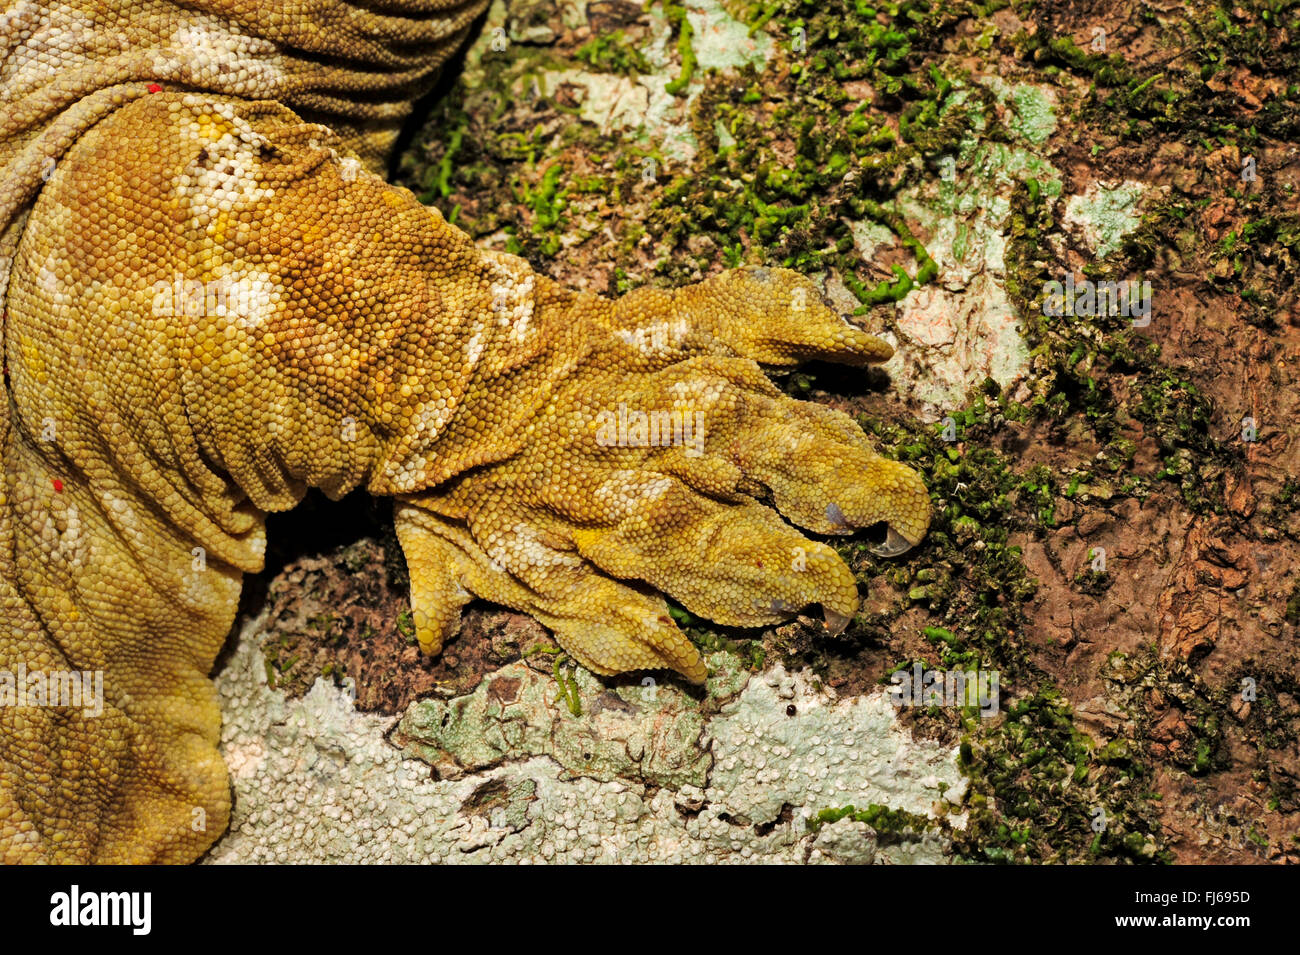 New Caledonian giant gecko, Leach's giant gecko, New Caledonia Giant Gecko   (Rhacodactylus leachianus henkeli, Rhacodactylus henkeli), hand, New Caledonia, Ile des Pins Stock Photo